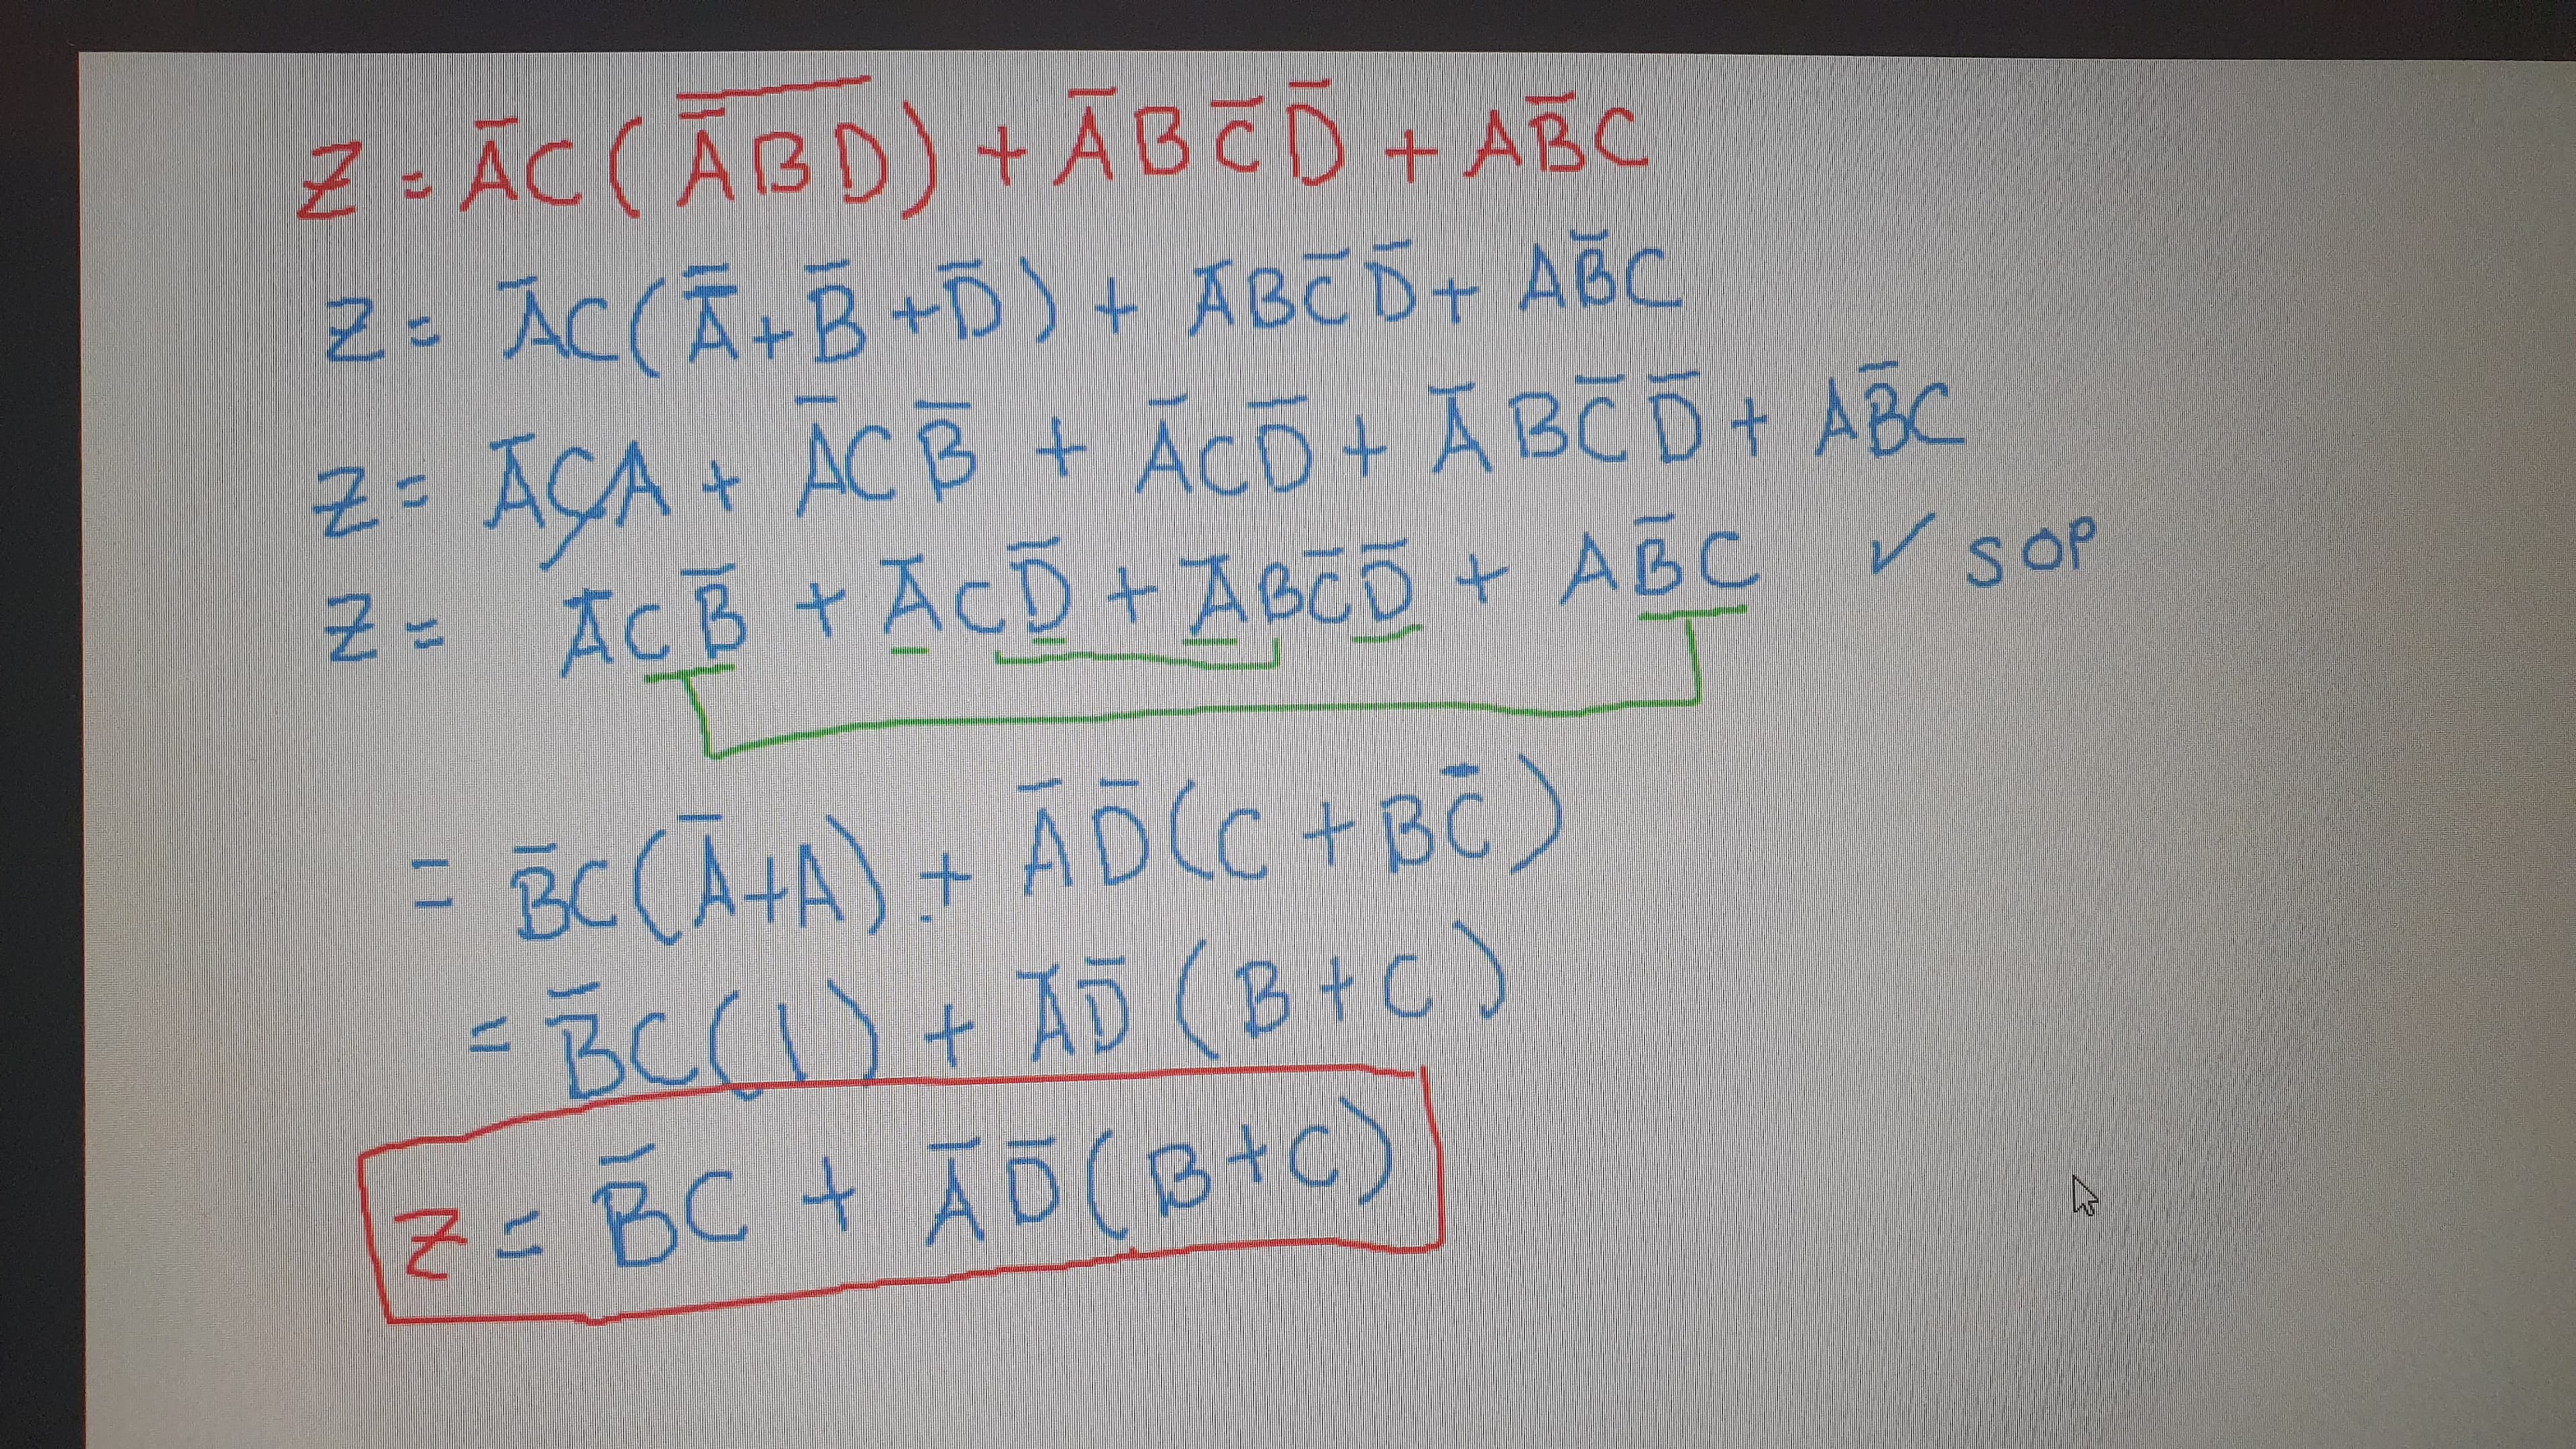 Z - ĀC (ĀBD) +ABCD + ABC
Z= ACCÃ+B +D ) + ABC Ō+ ABc
Z= AÇA + ACB + ACD + Ã BC D + ABC
Z= ACB + ACD VSOP
+ABCD + ABCC
= BC (Ã+A) + ADCC + BC)
-BC(1) + ÃD (B+C)
Z< BC t Ā (B+C)
